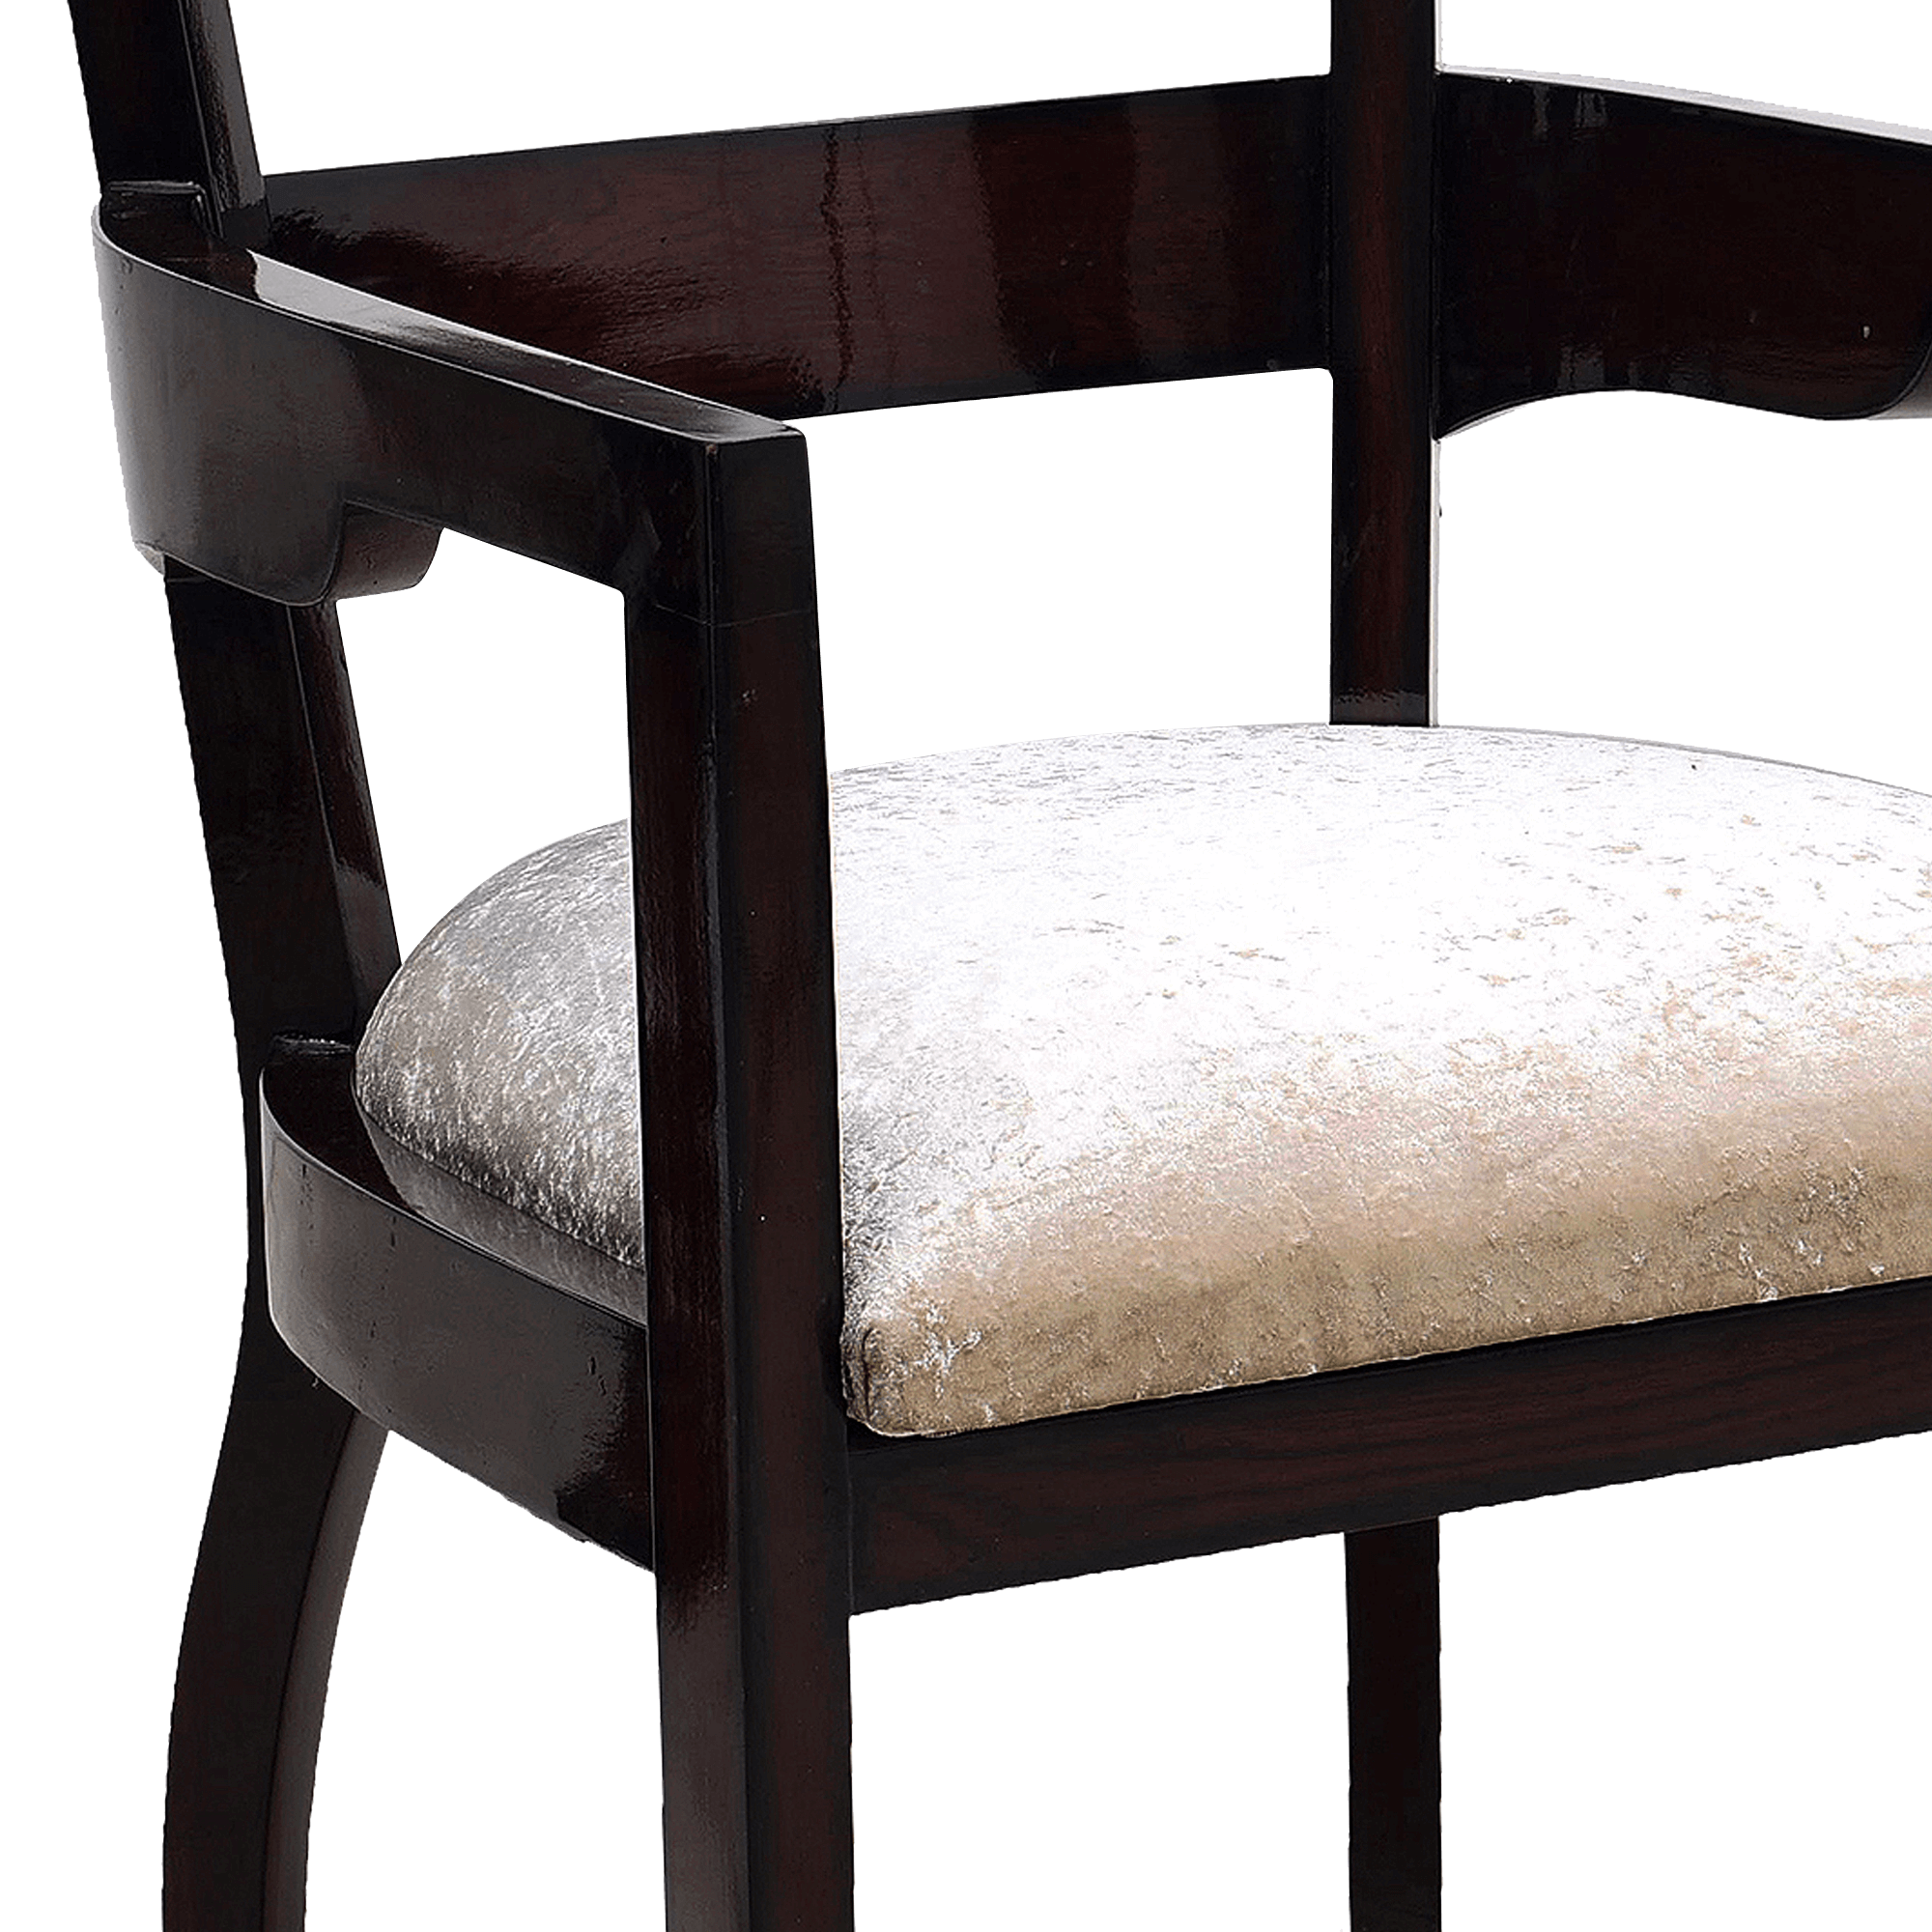 Projakto Teak Wood Living Room Chair (Brown)